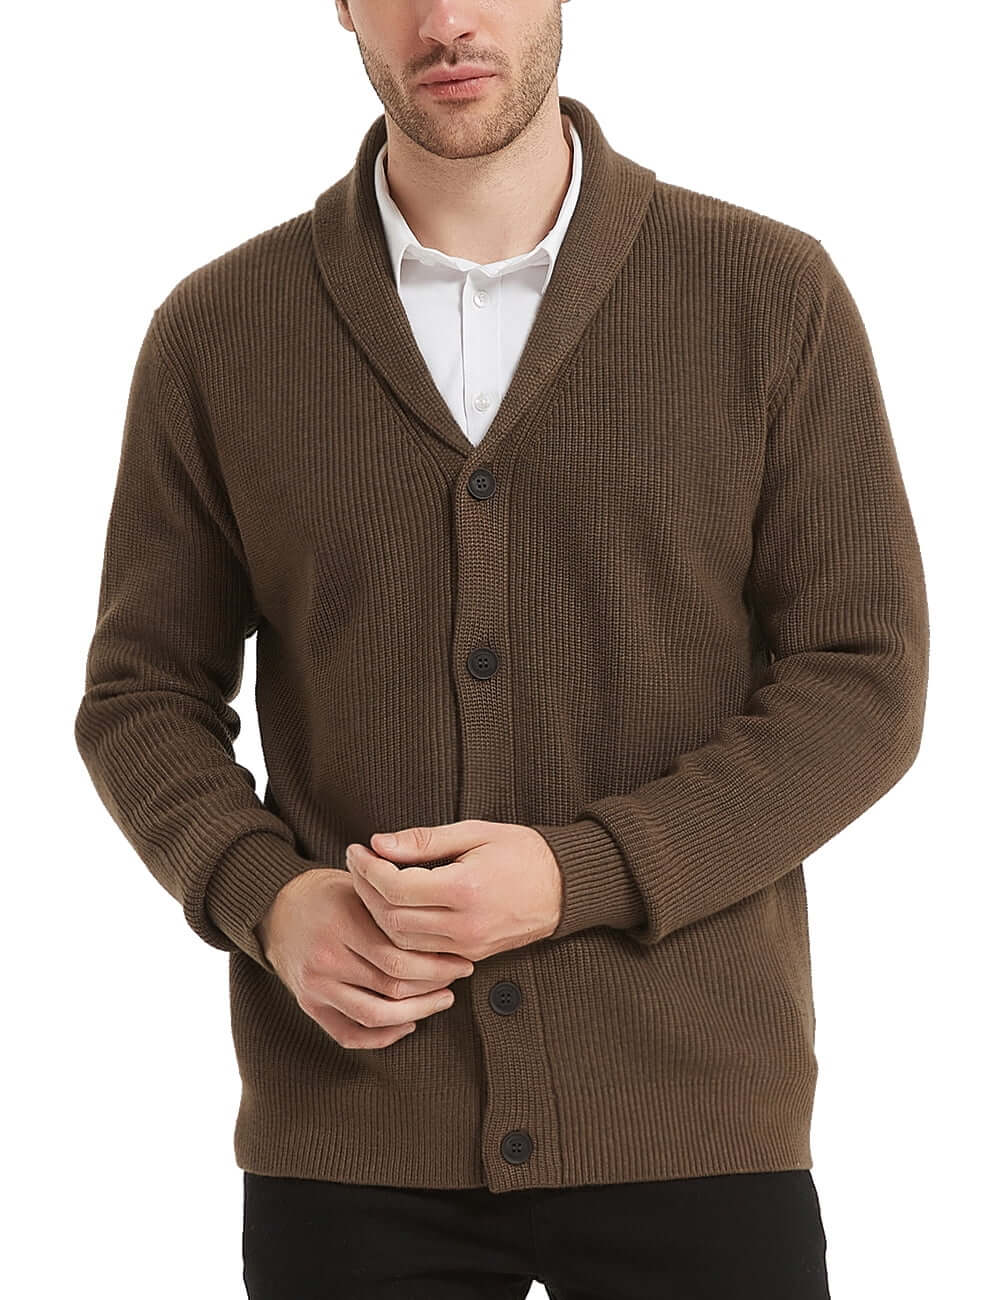 OEM/ODM 100%cotton Cardigan V-neck Botton Men’s Sweater | Sweater Manufacturer